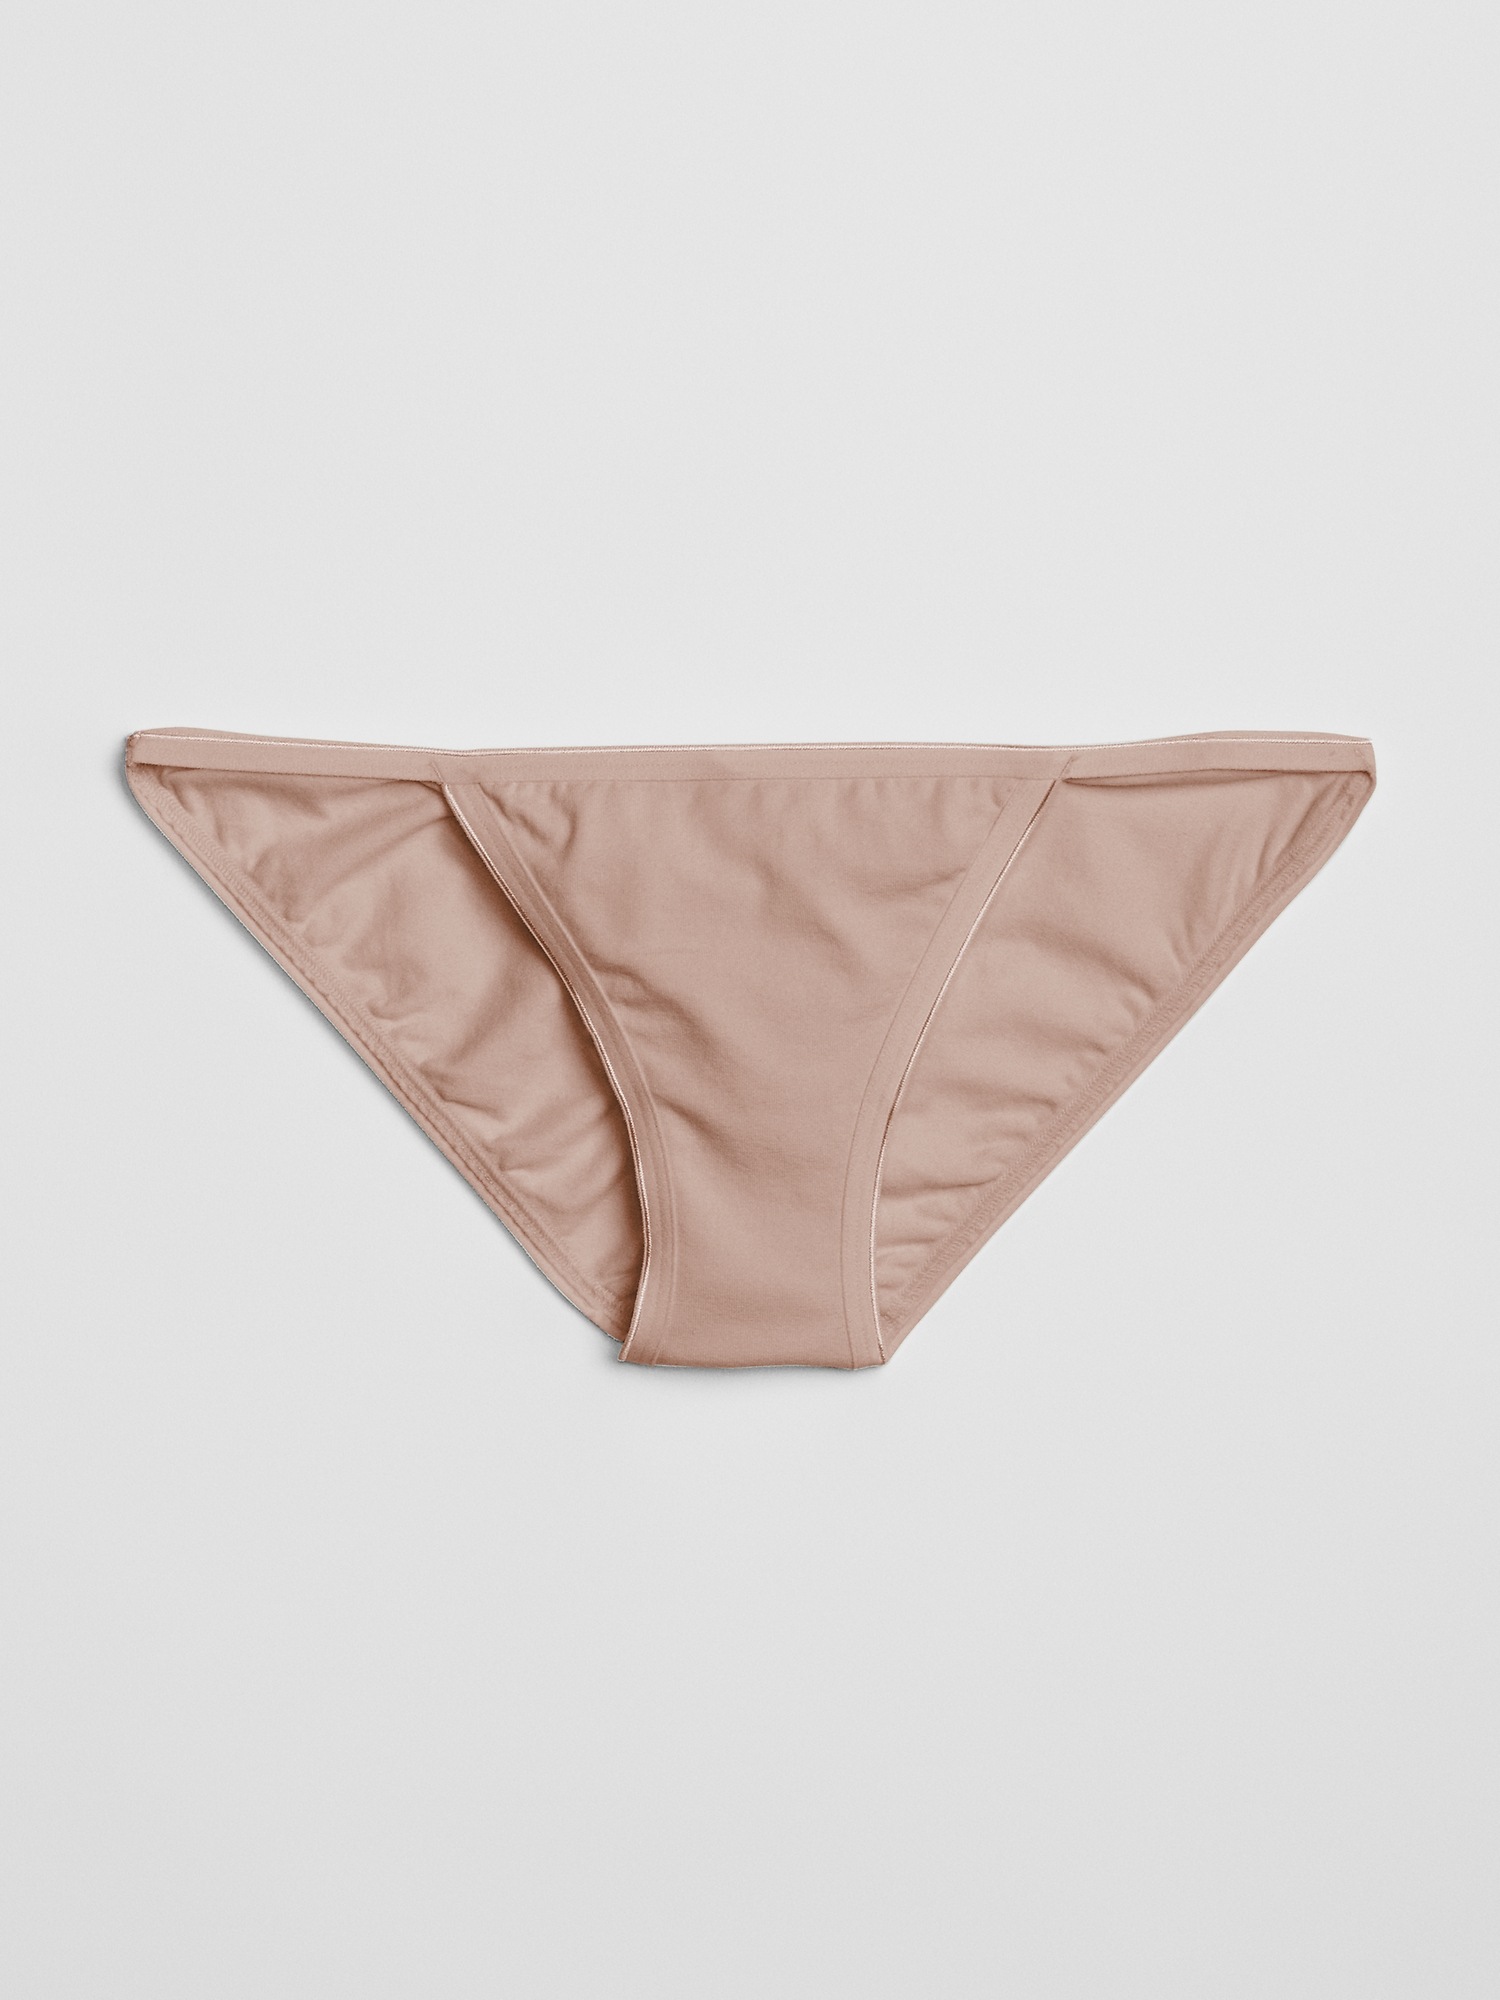 GAP Women's Stretch Cotton Bikini Underpants Underwear